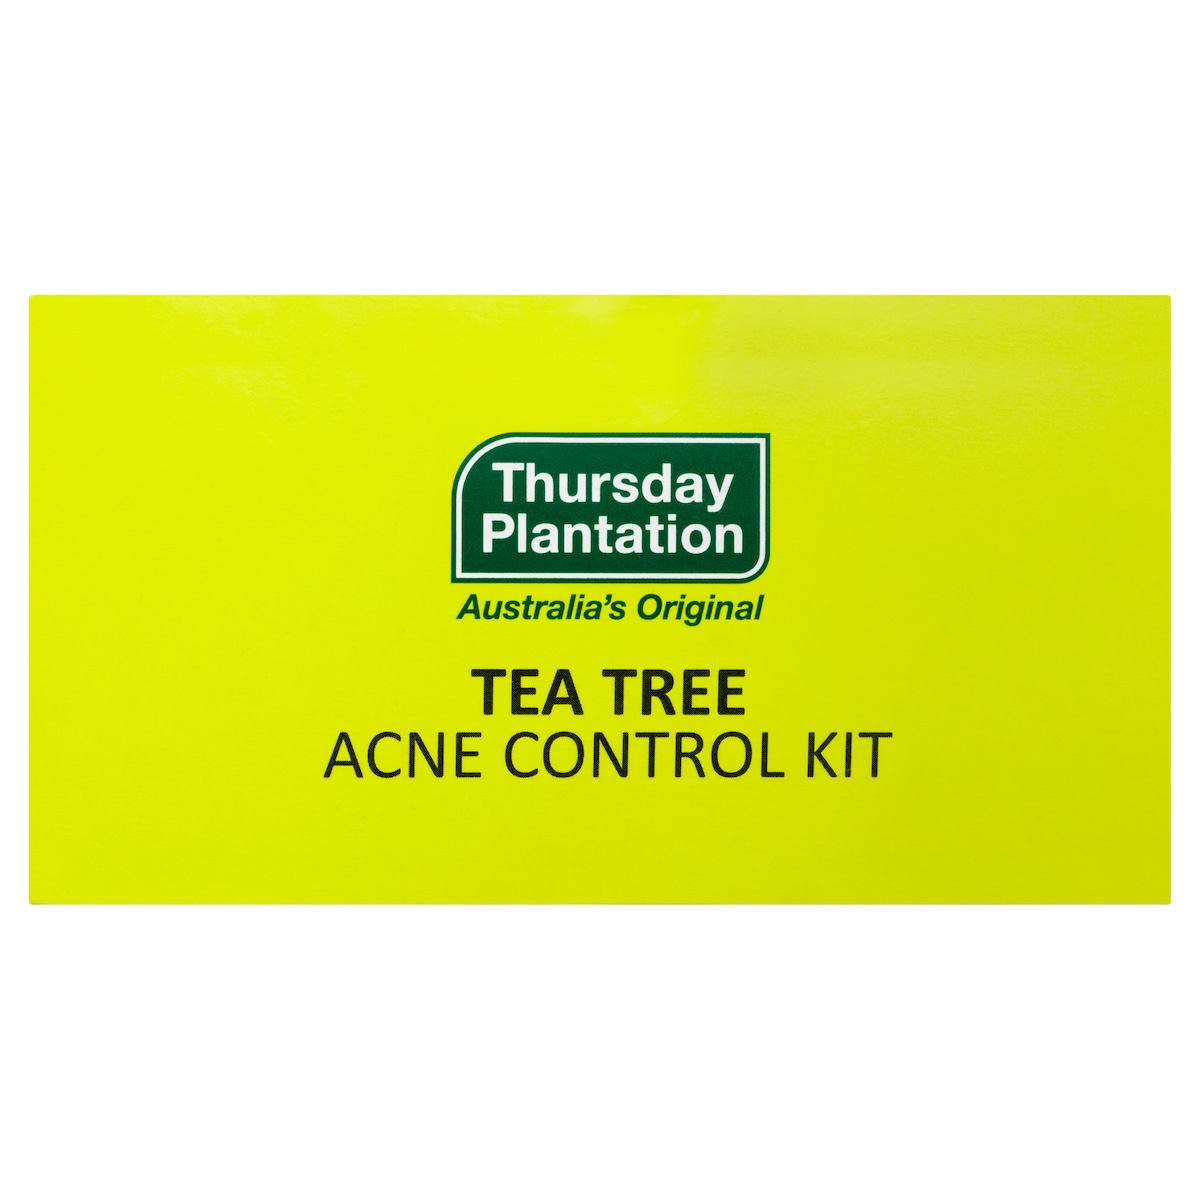 Thursday Plantation Tea Tree Clear Skin & Acne Control Kit